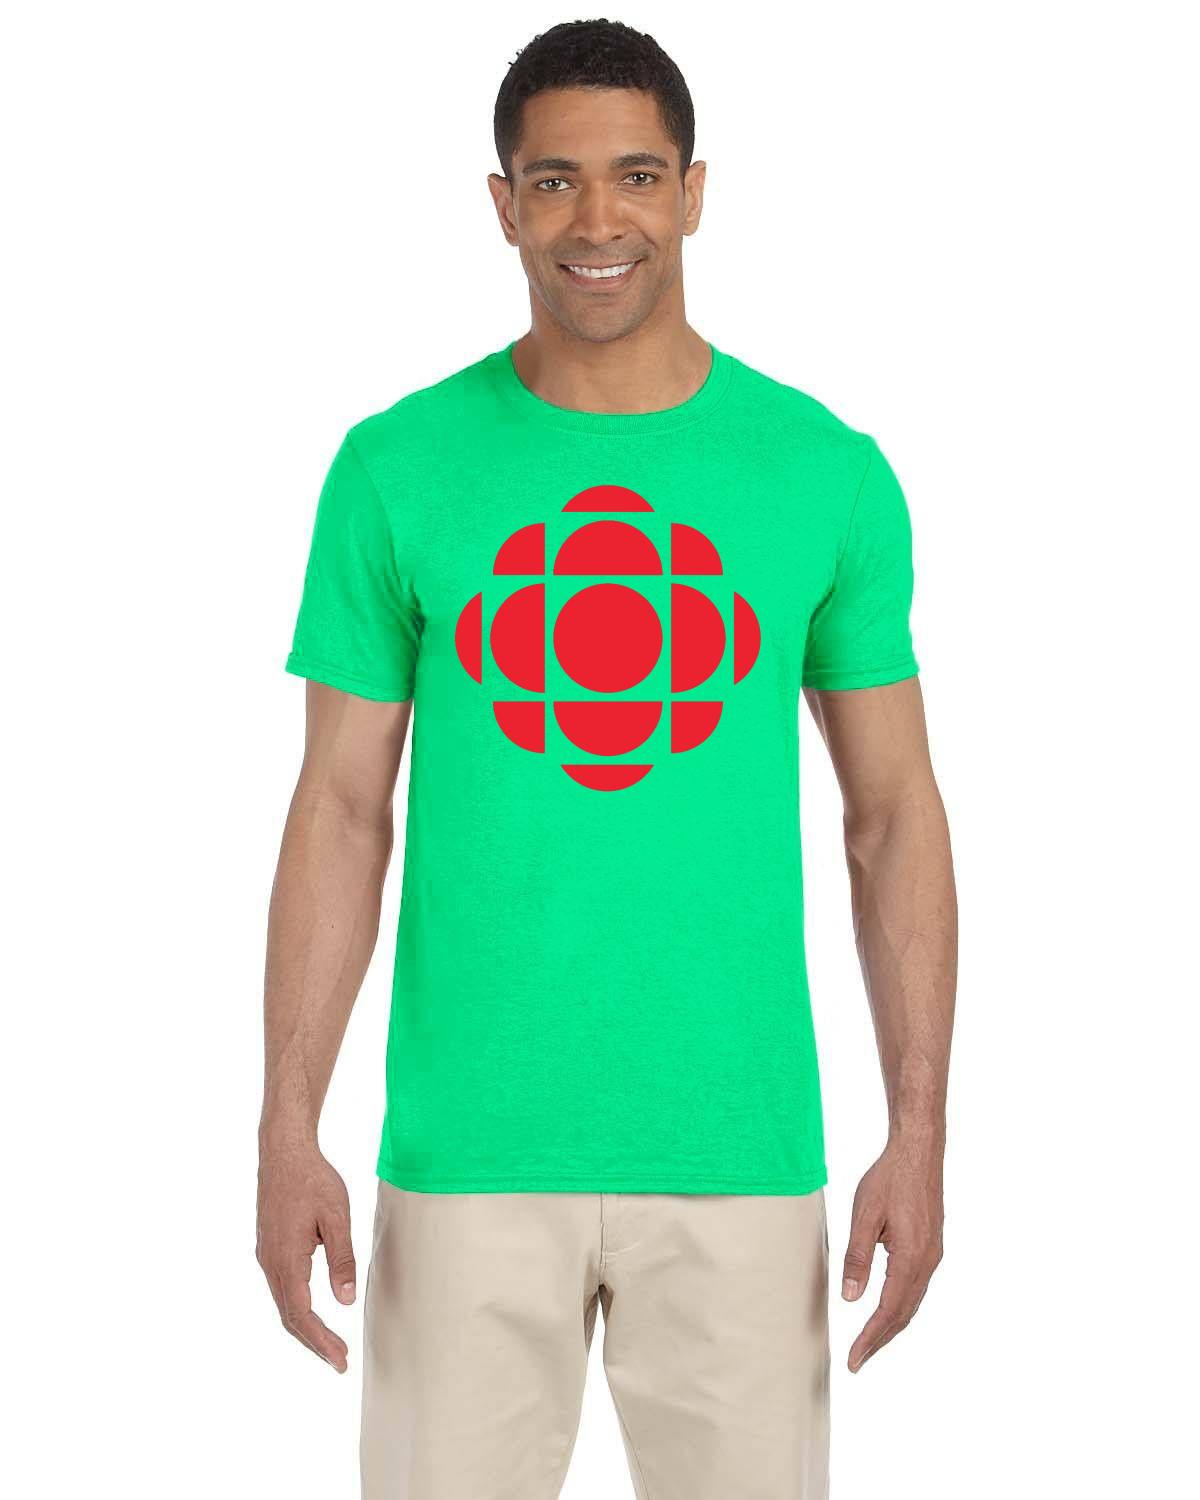 CBC Gem Red Logo T-Shirt, Canadian Nostalgia, Officially Licensed CBC Apparel